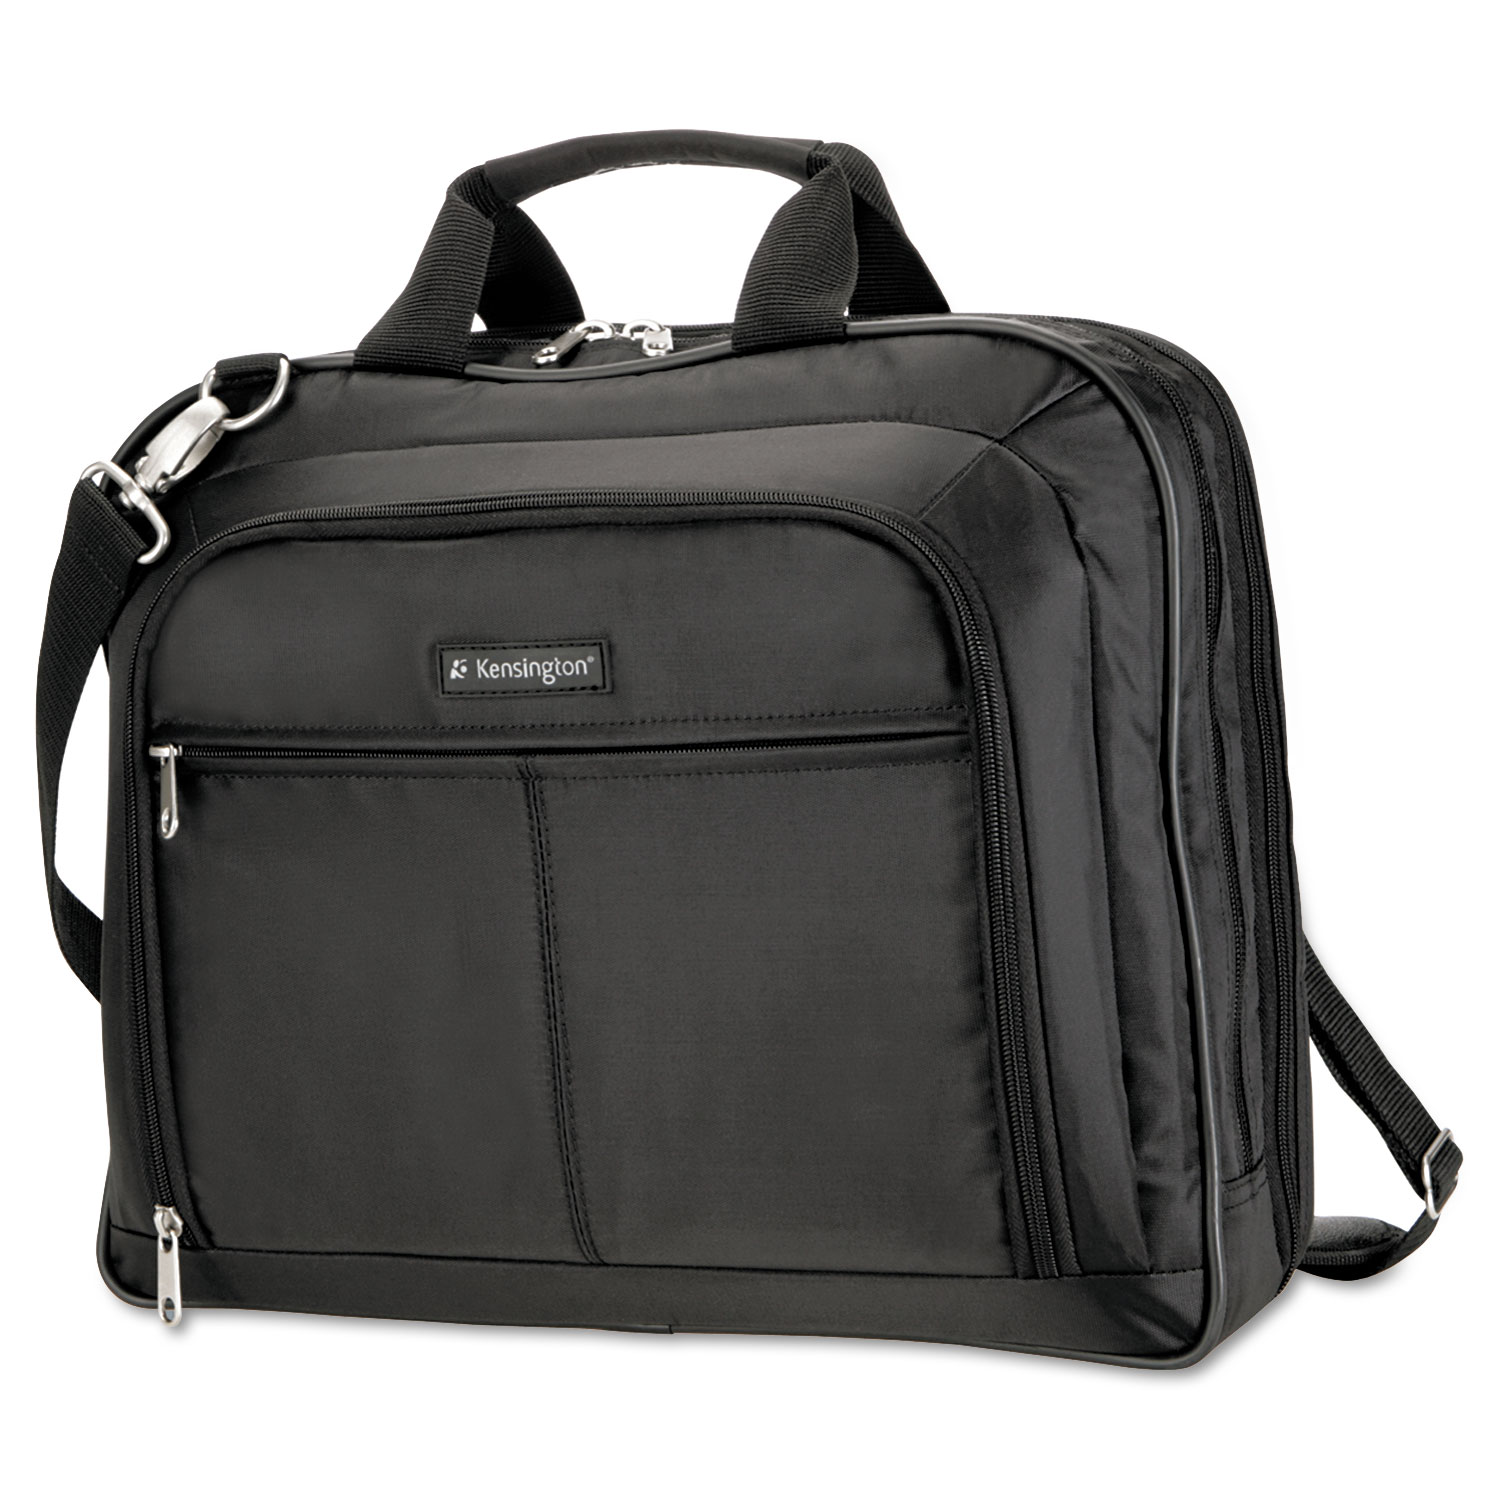 Simply Portable 40 Classic Laptop Case, 15-3/4 x 3-1/2 x 12-1/2, Black